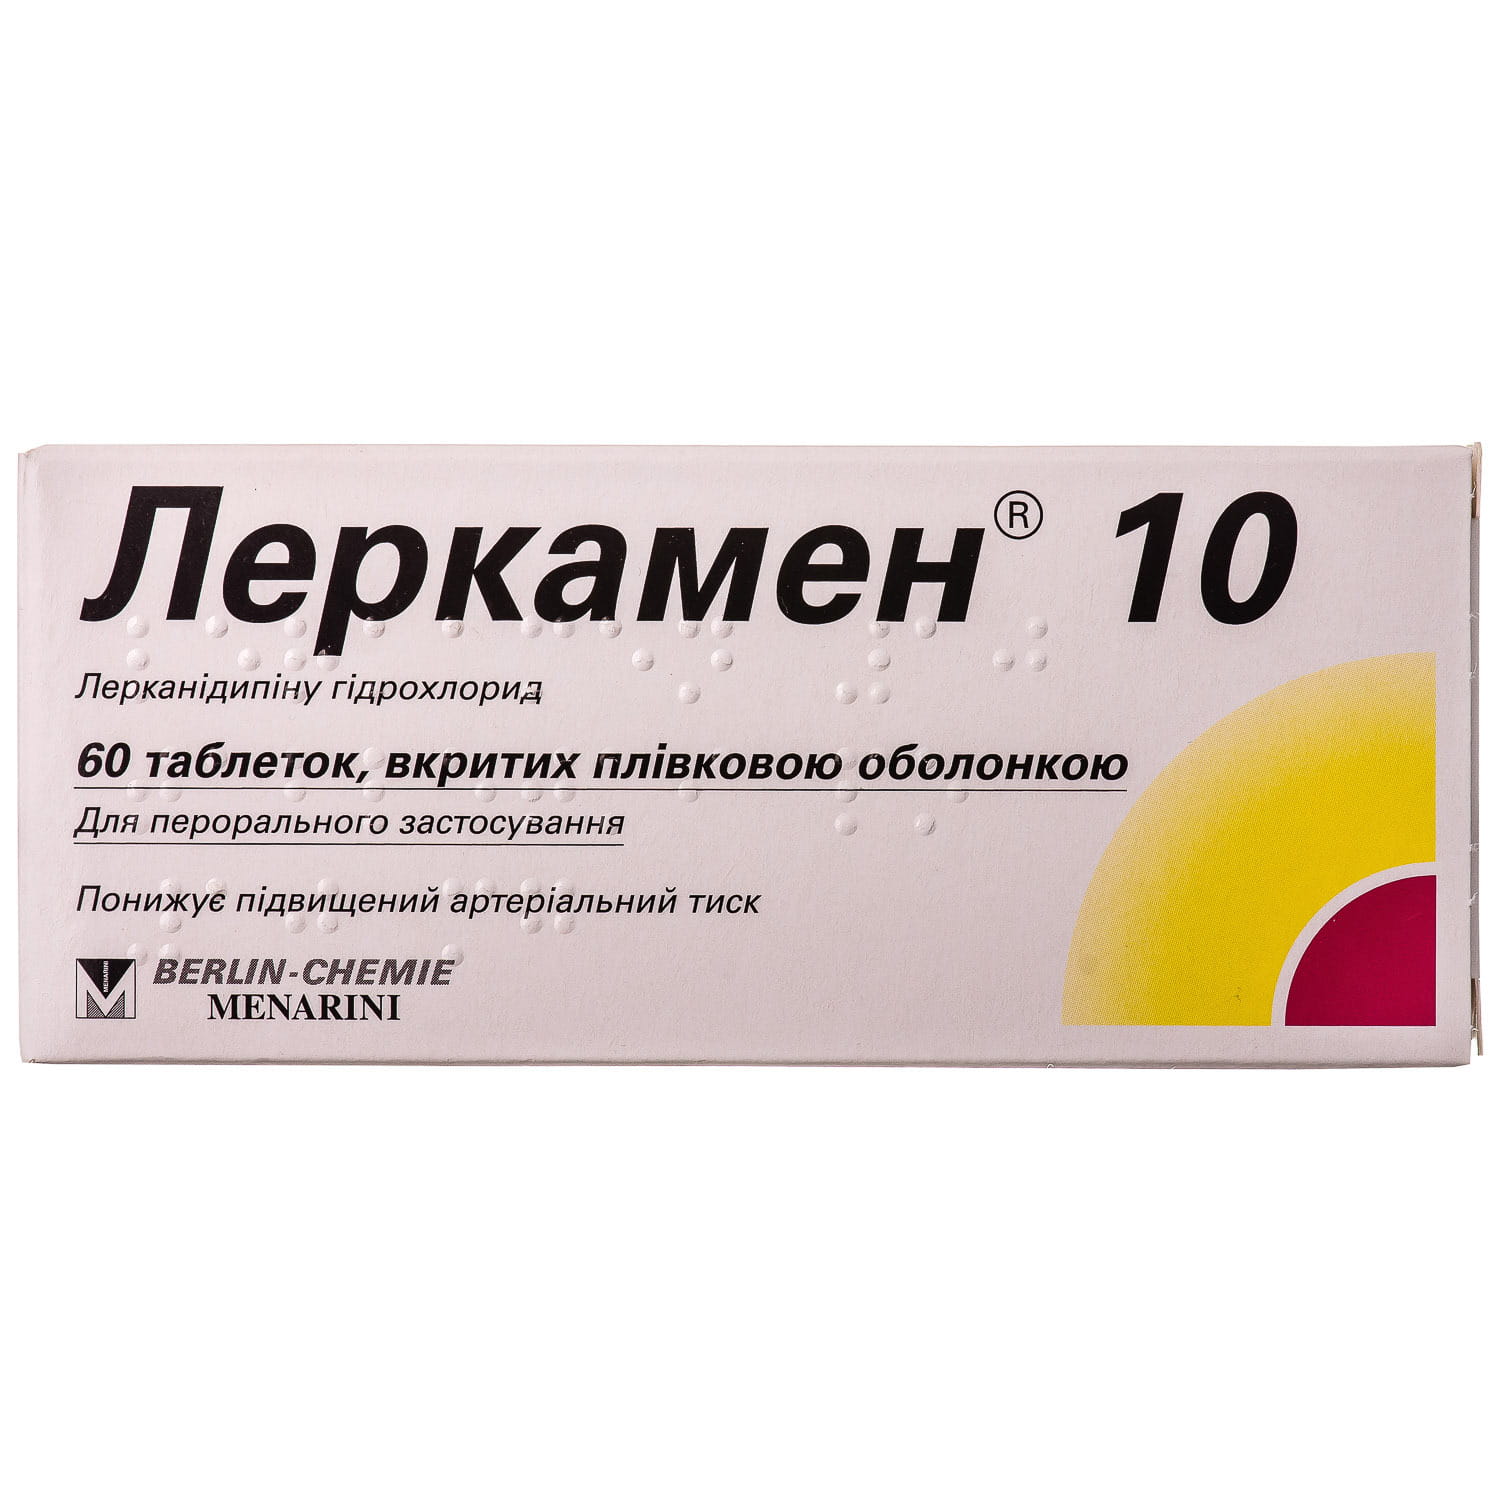 Леркамен Цена В Аптеках Новосибирска